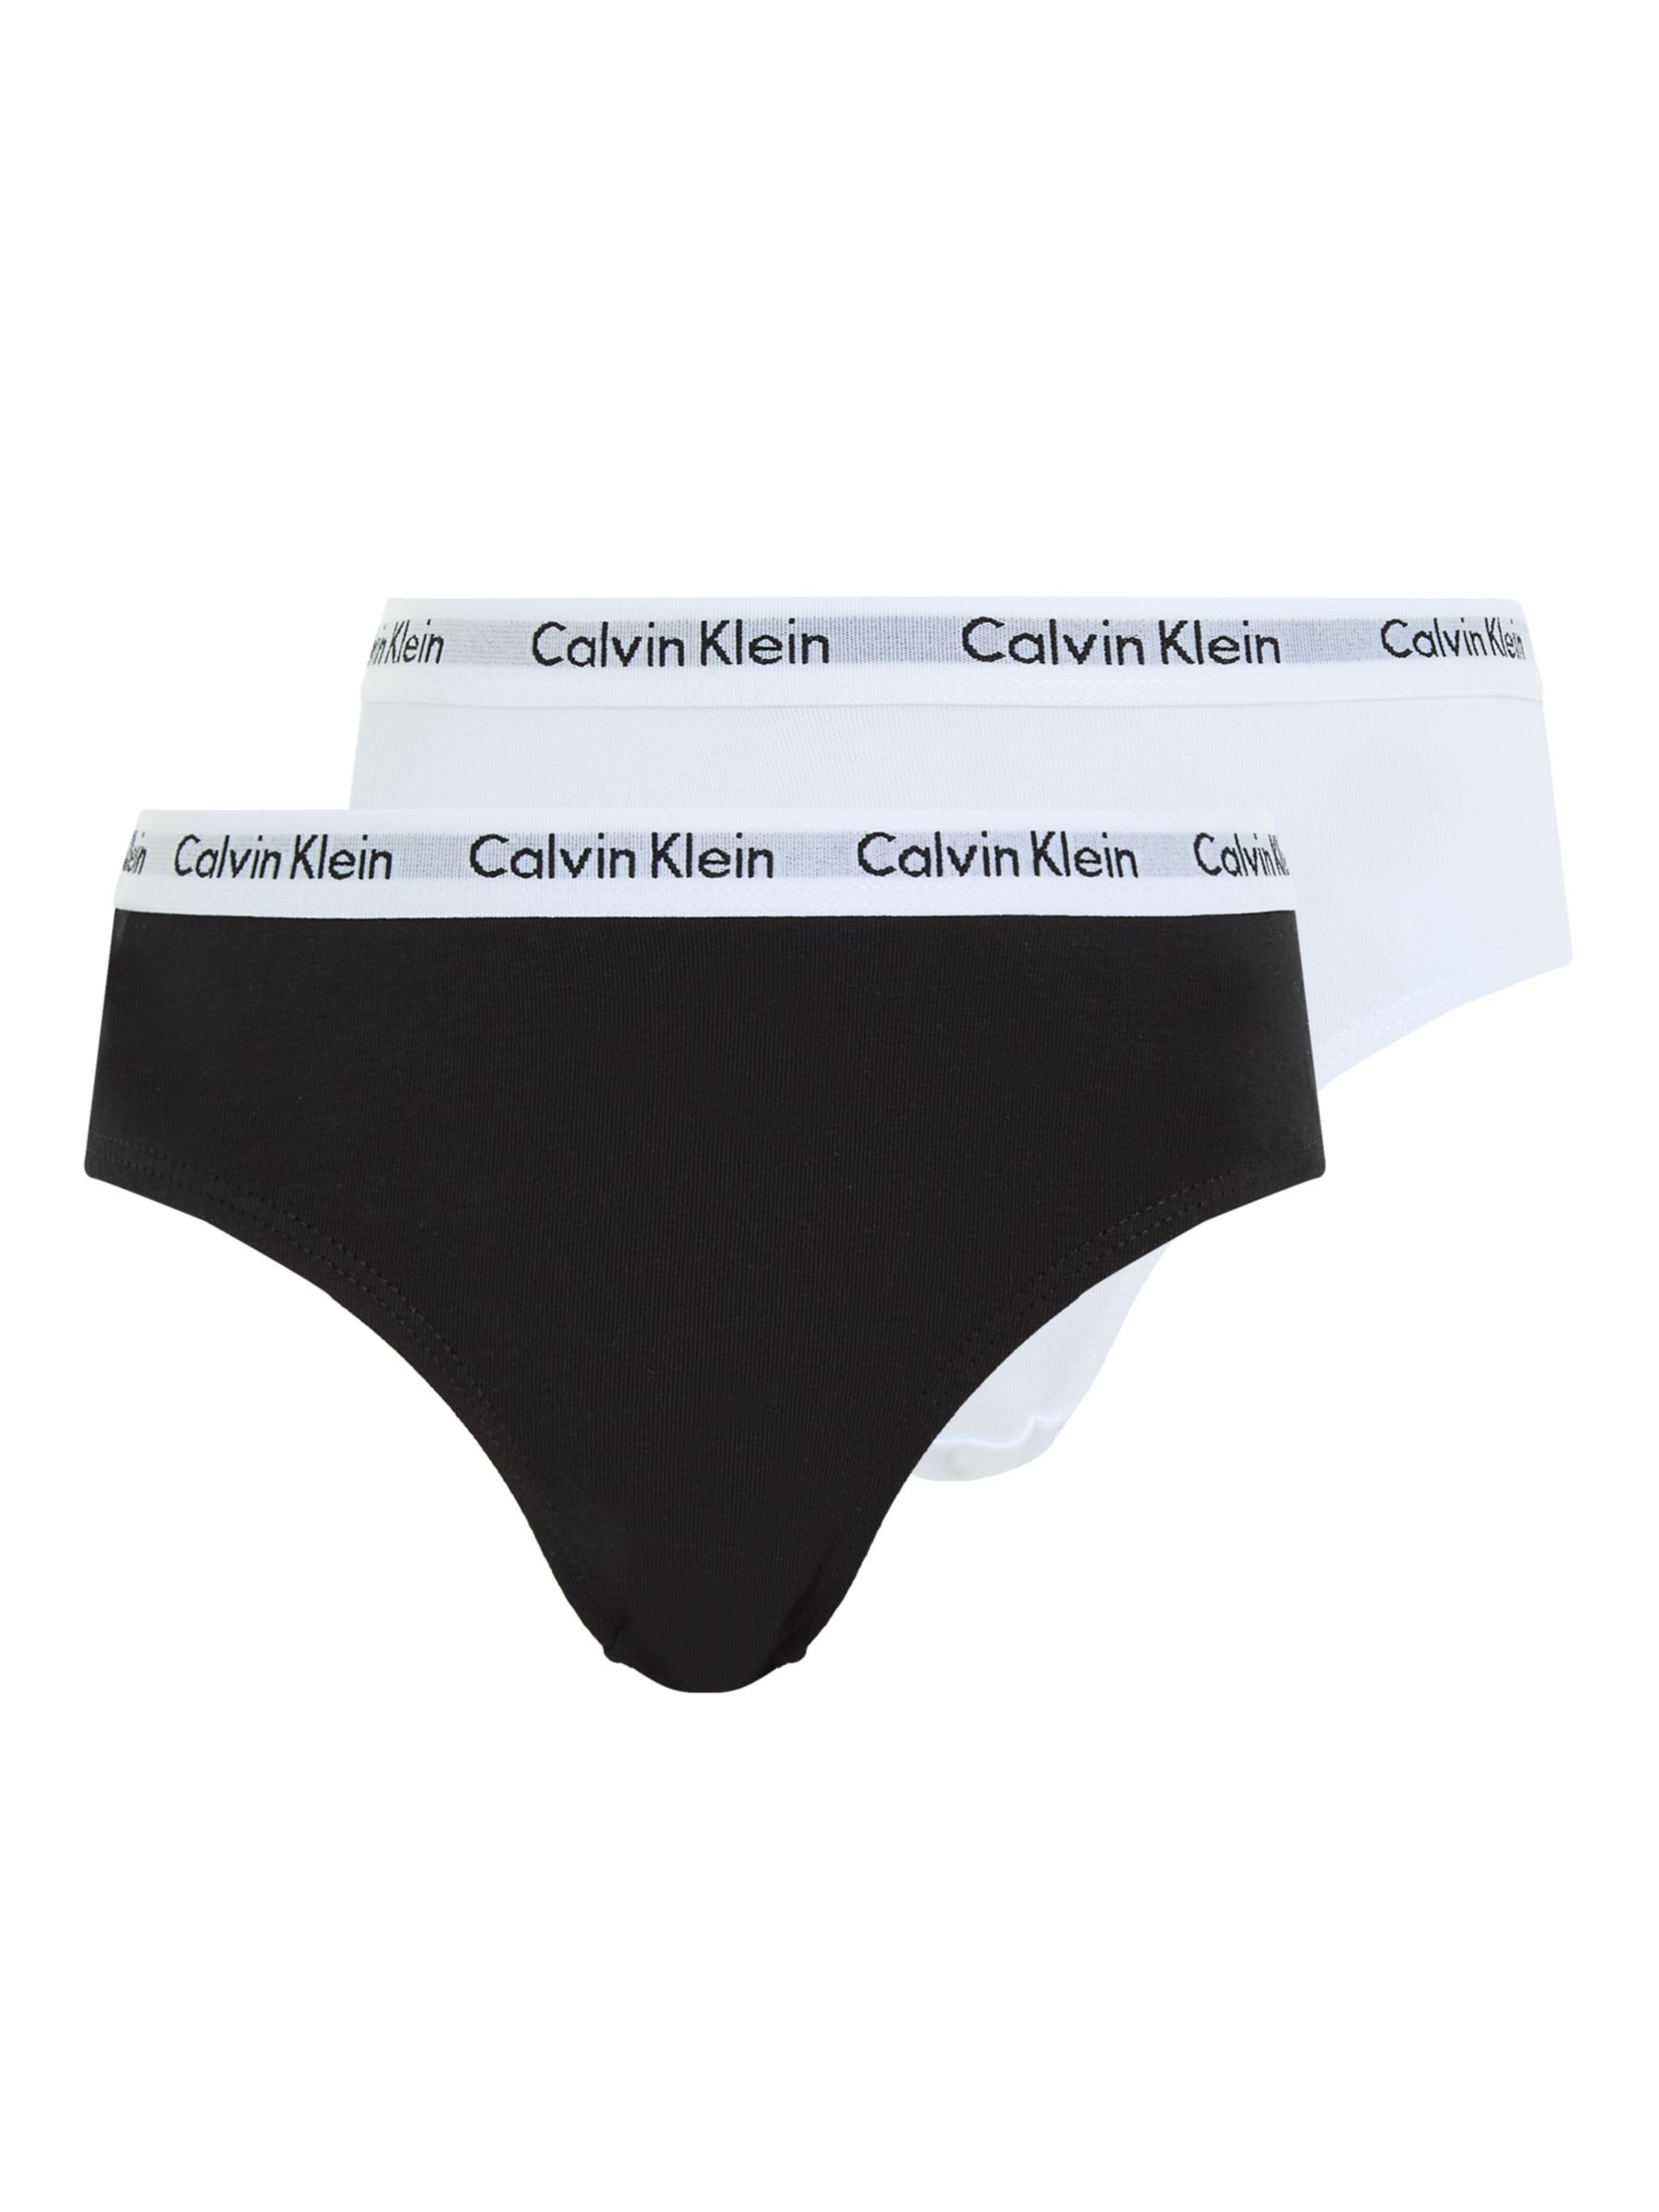 Calvin Klein Kids' Bikini Briefs, Pack of 2, Black/White, 10-12 years